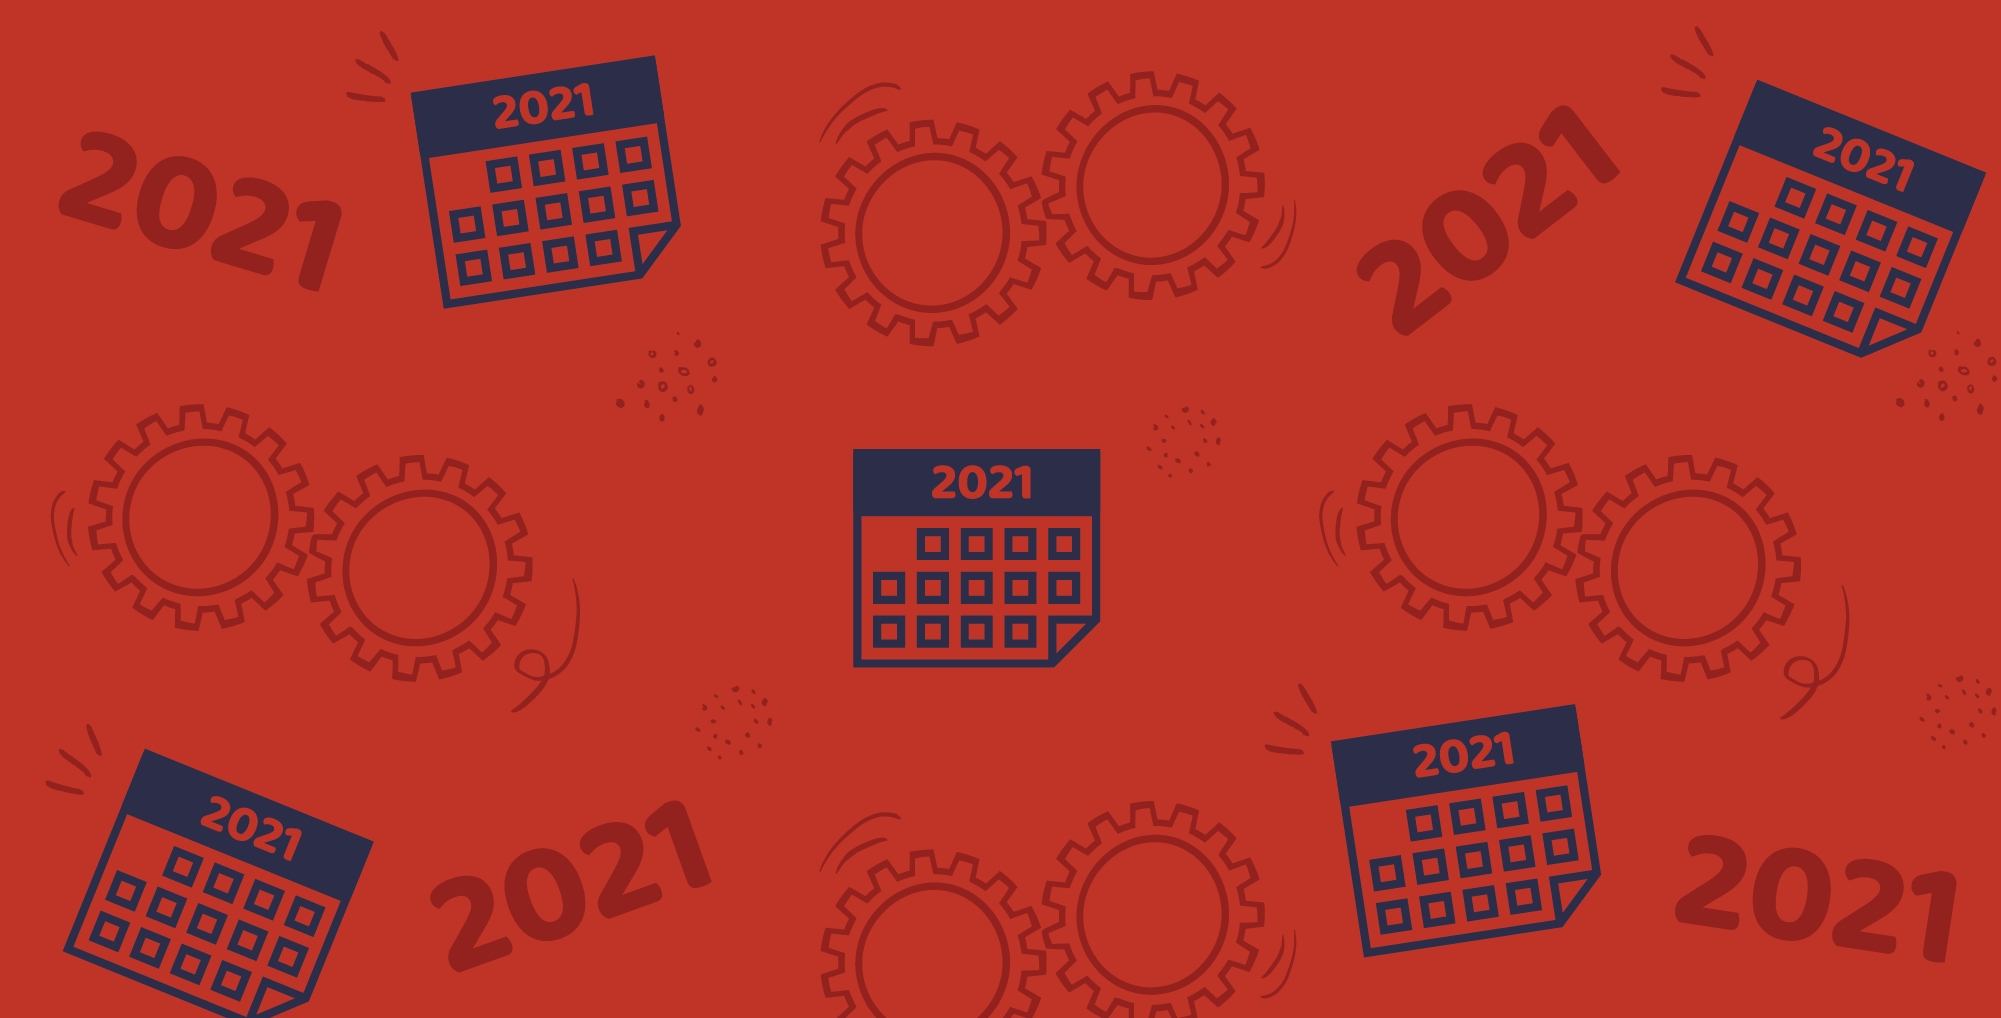 Make Sure You Get Your 2021 Calendar | Public Service Sick Day Calendar For Employees 2021